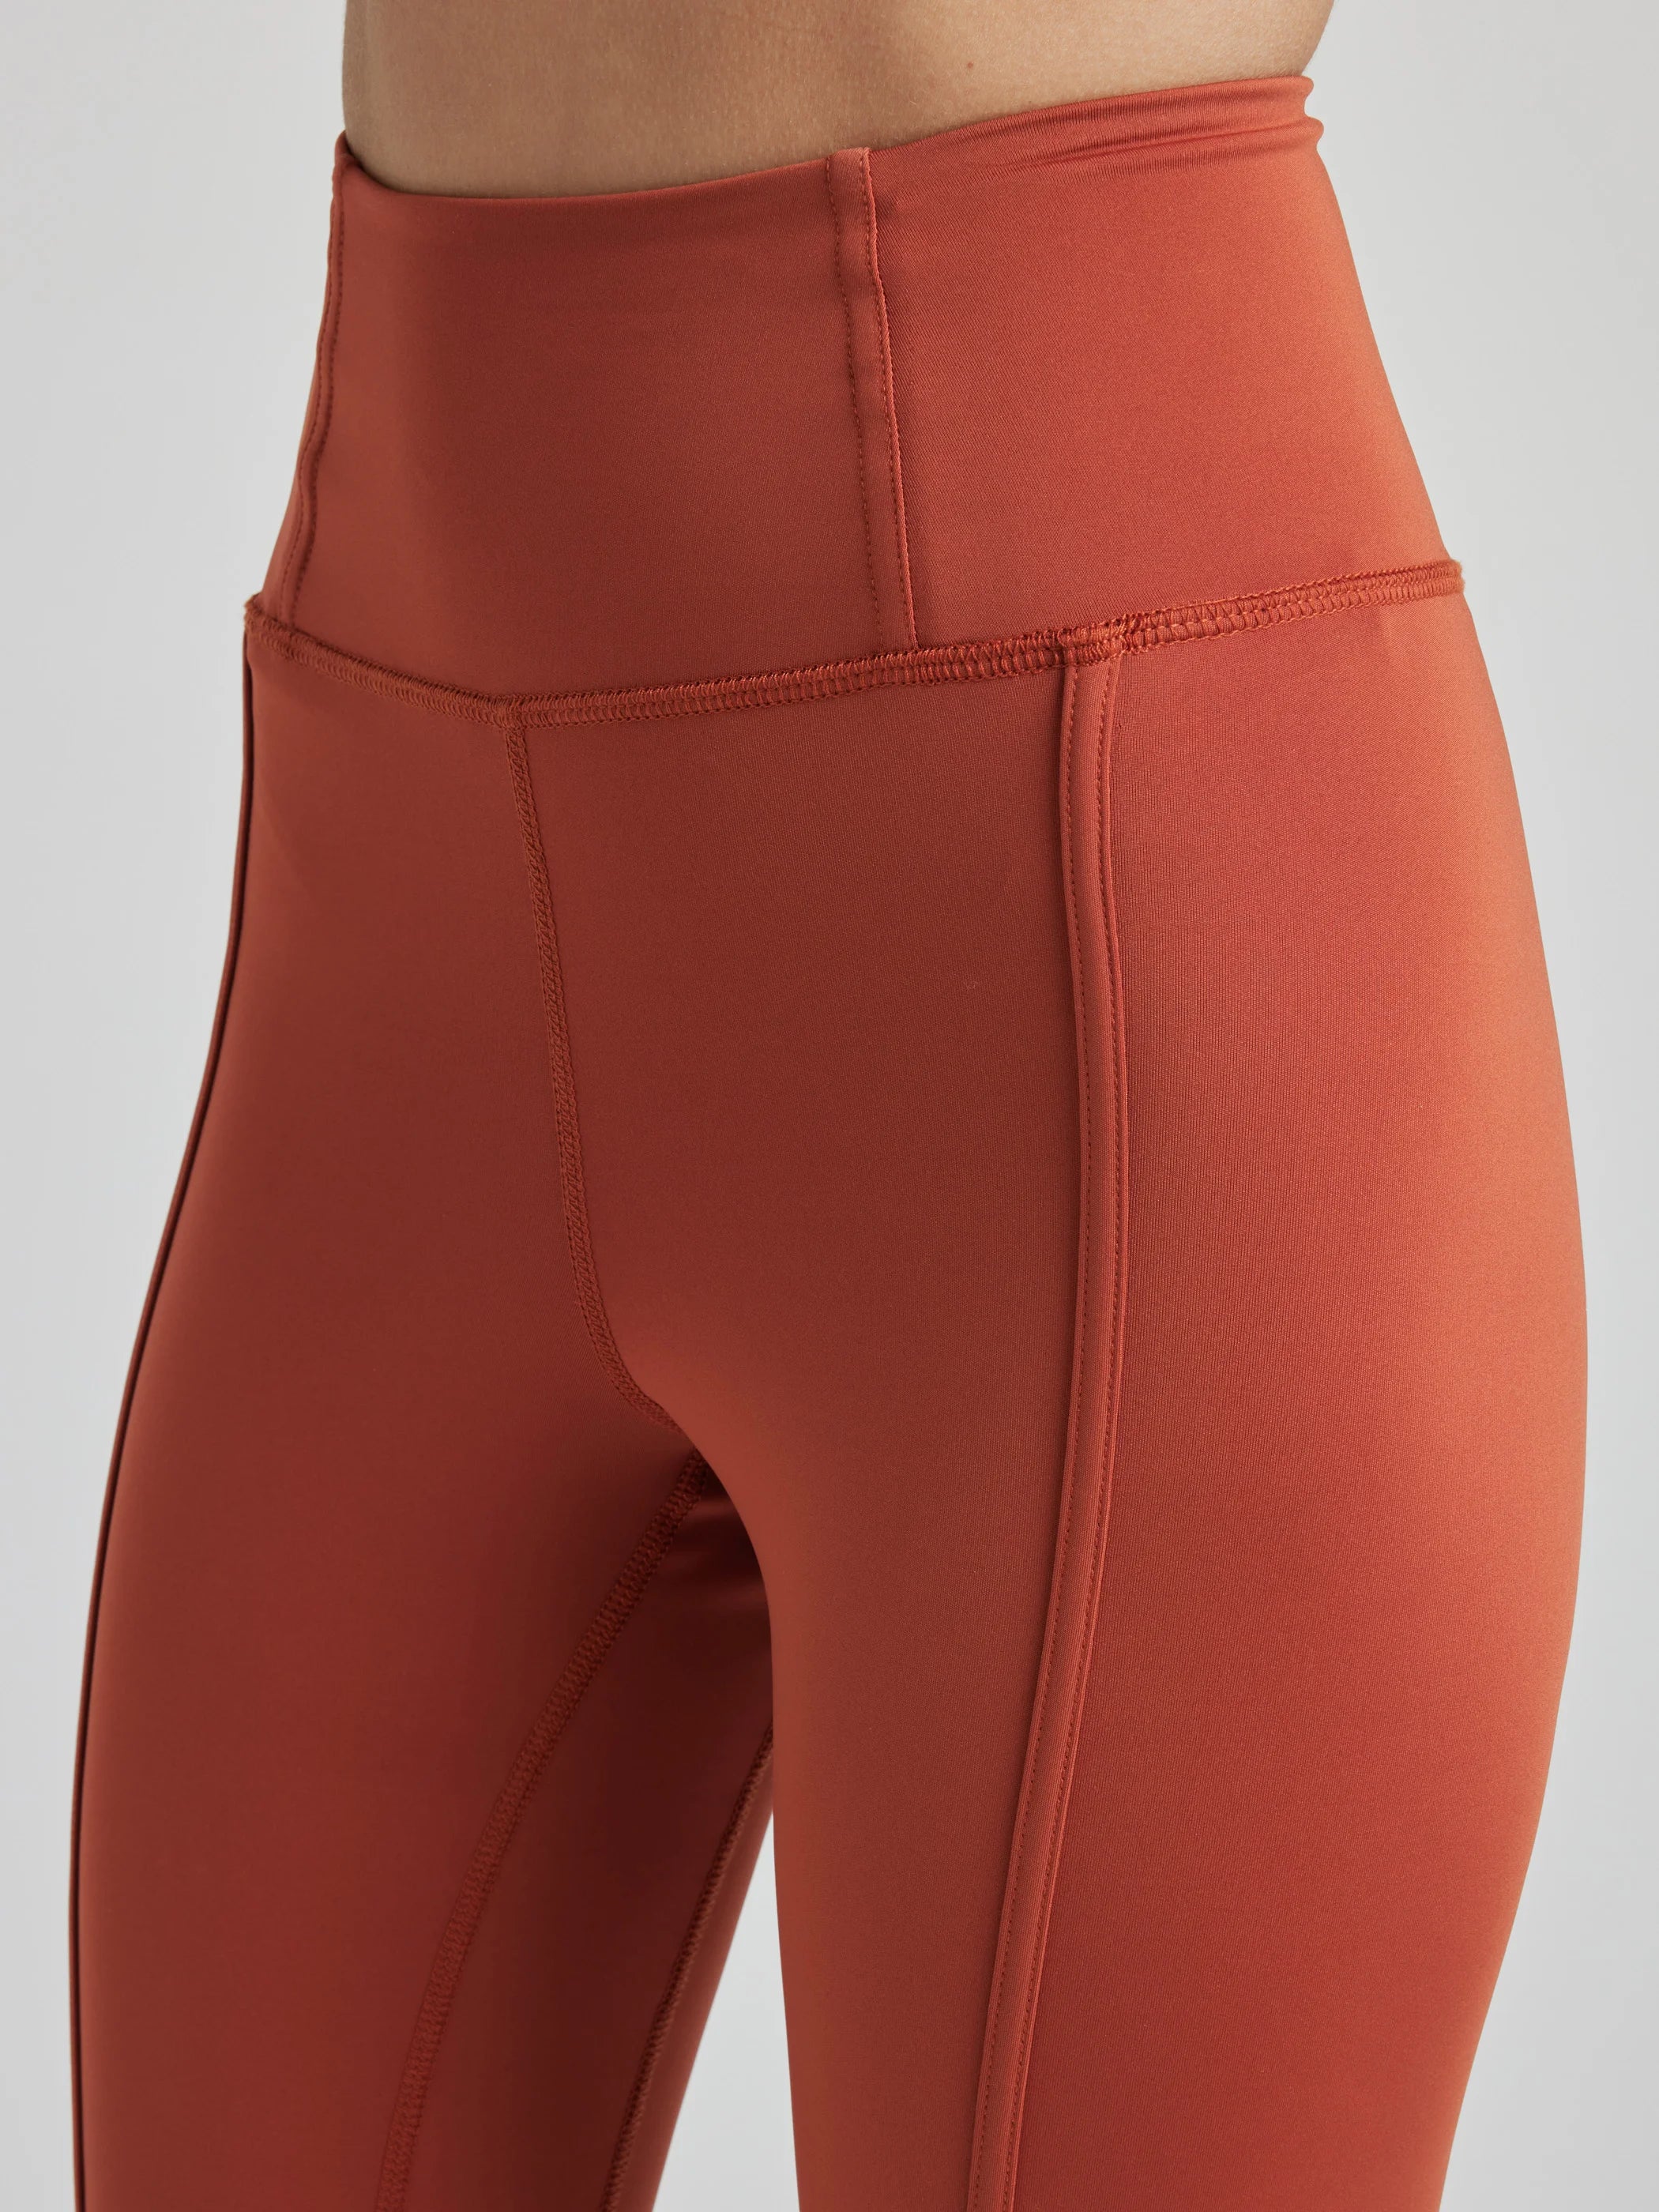 Contour High Waist Leggings - Orange Melange - Clothing